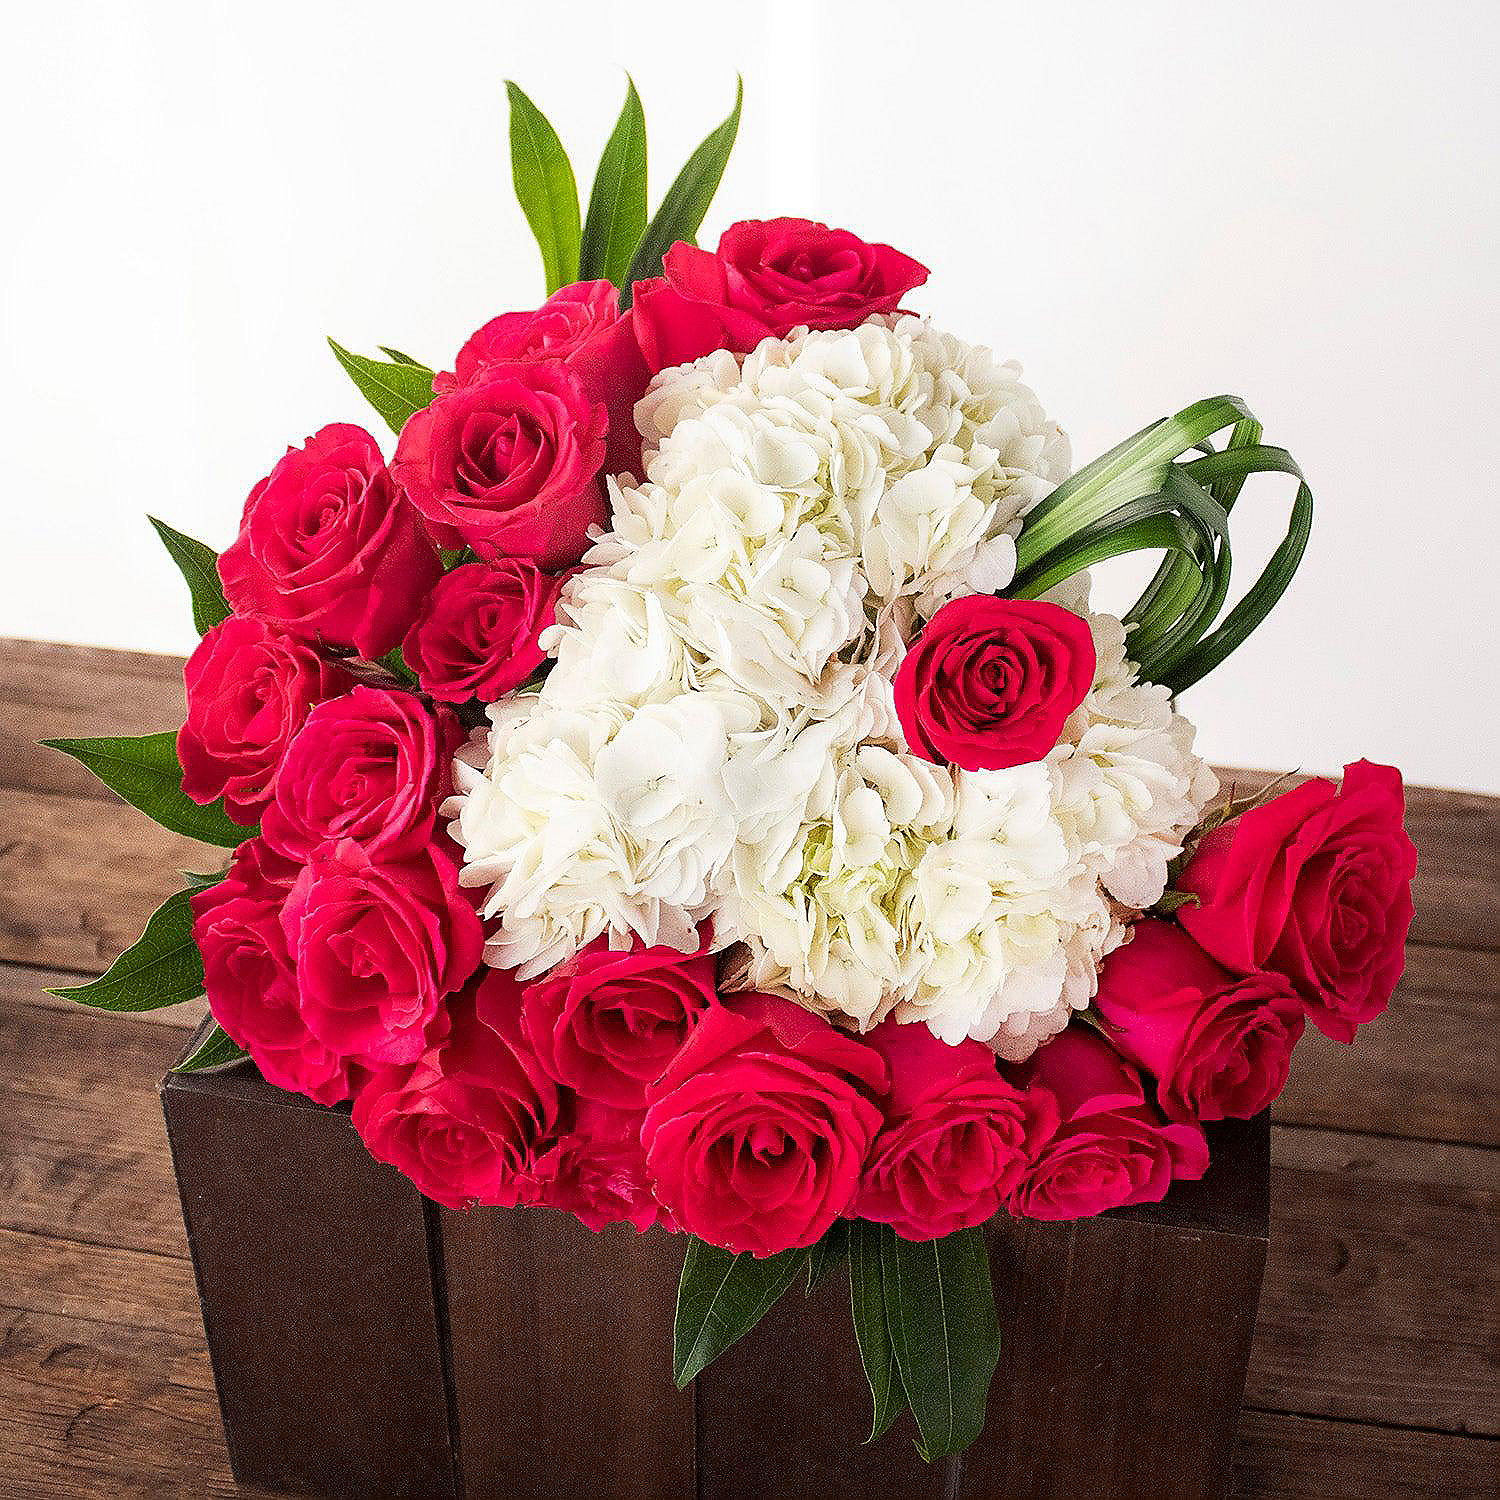 fresh-valentines-flowers-heart-shaped-bouquet_14333927-a01$NOWA$